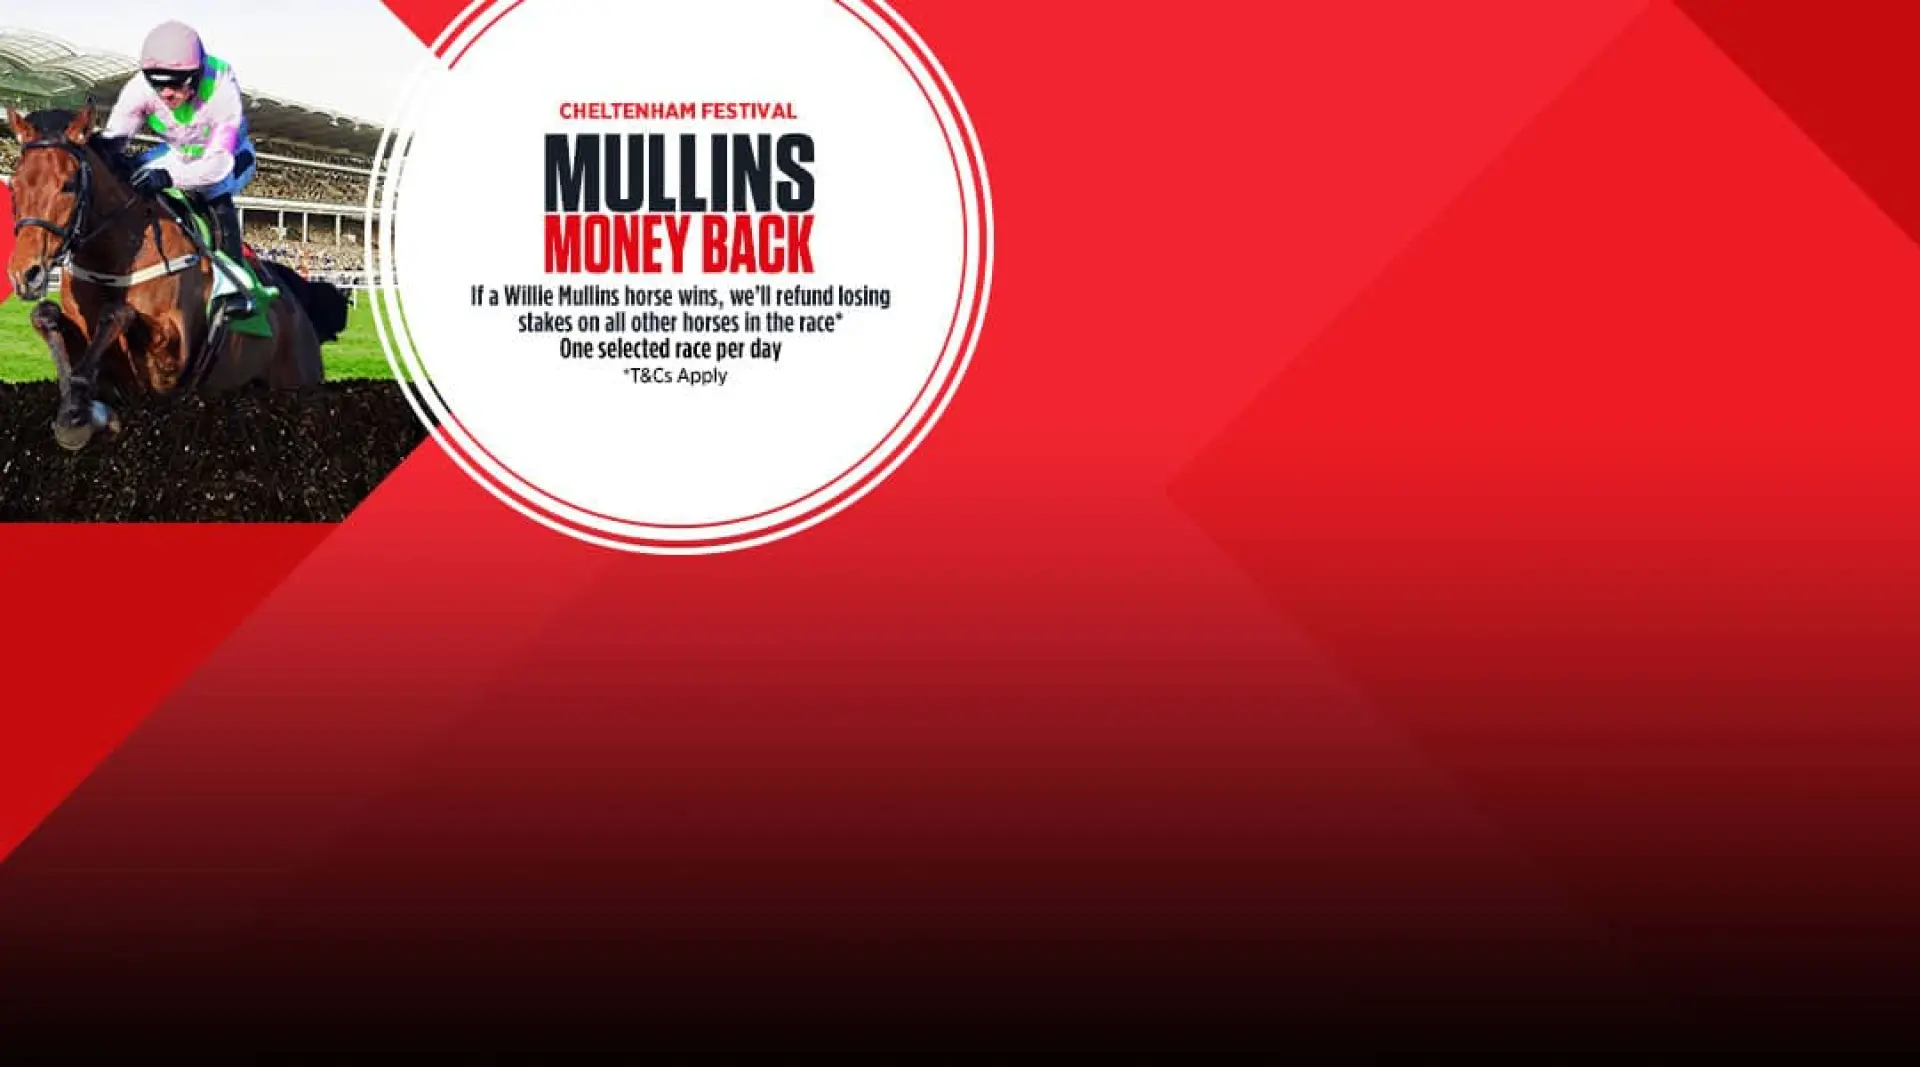 Mullins Money Back - Cheltenham 2017